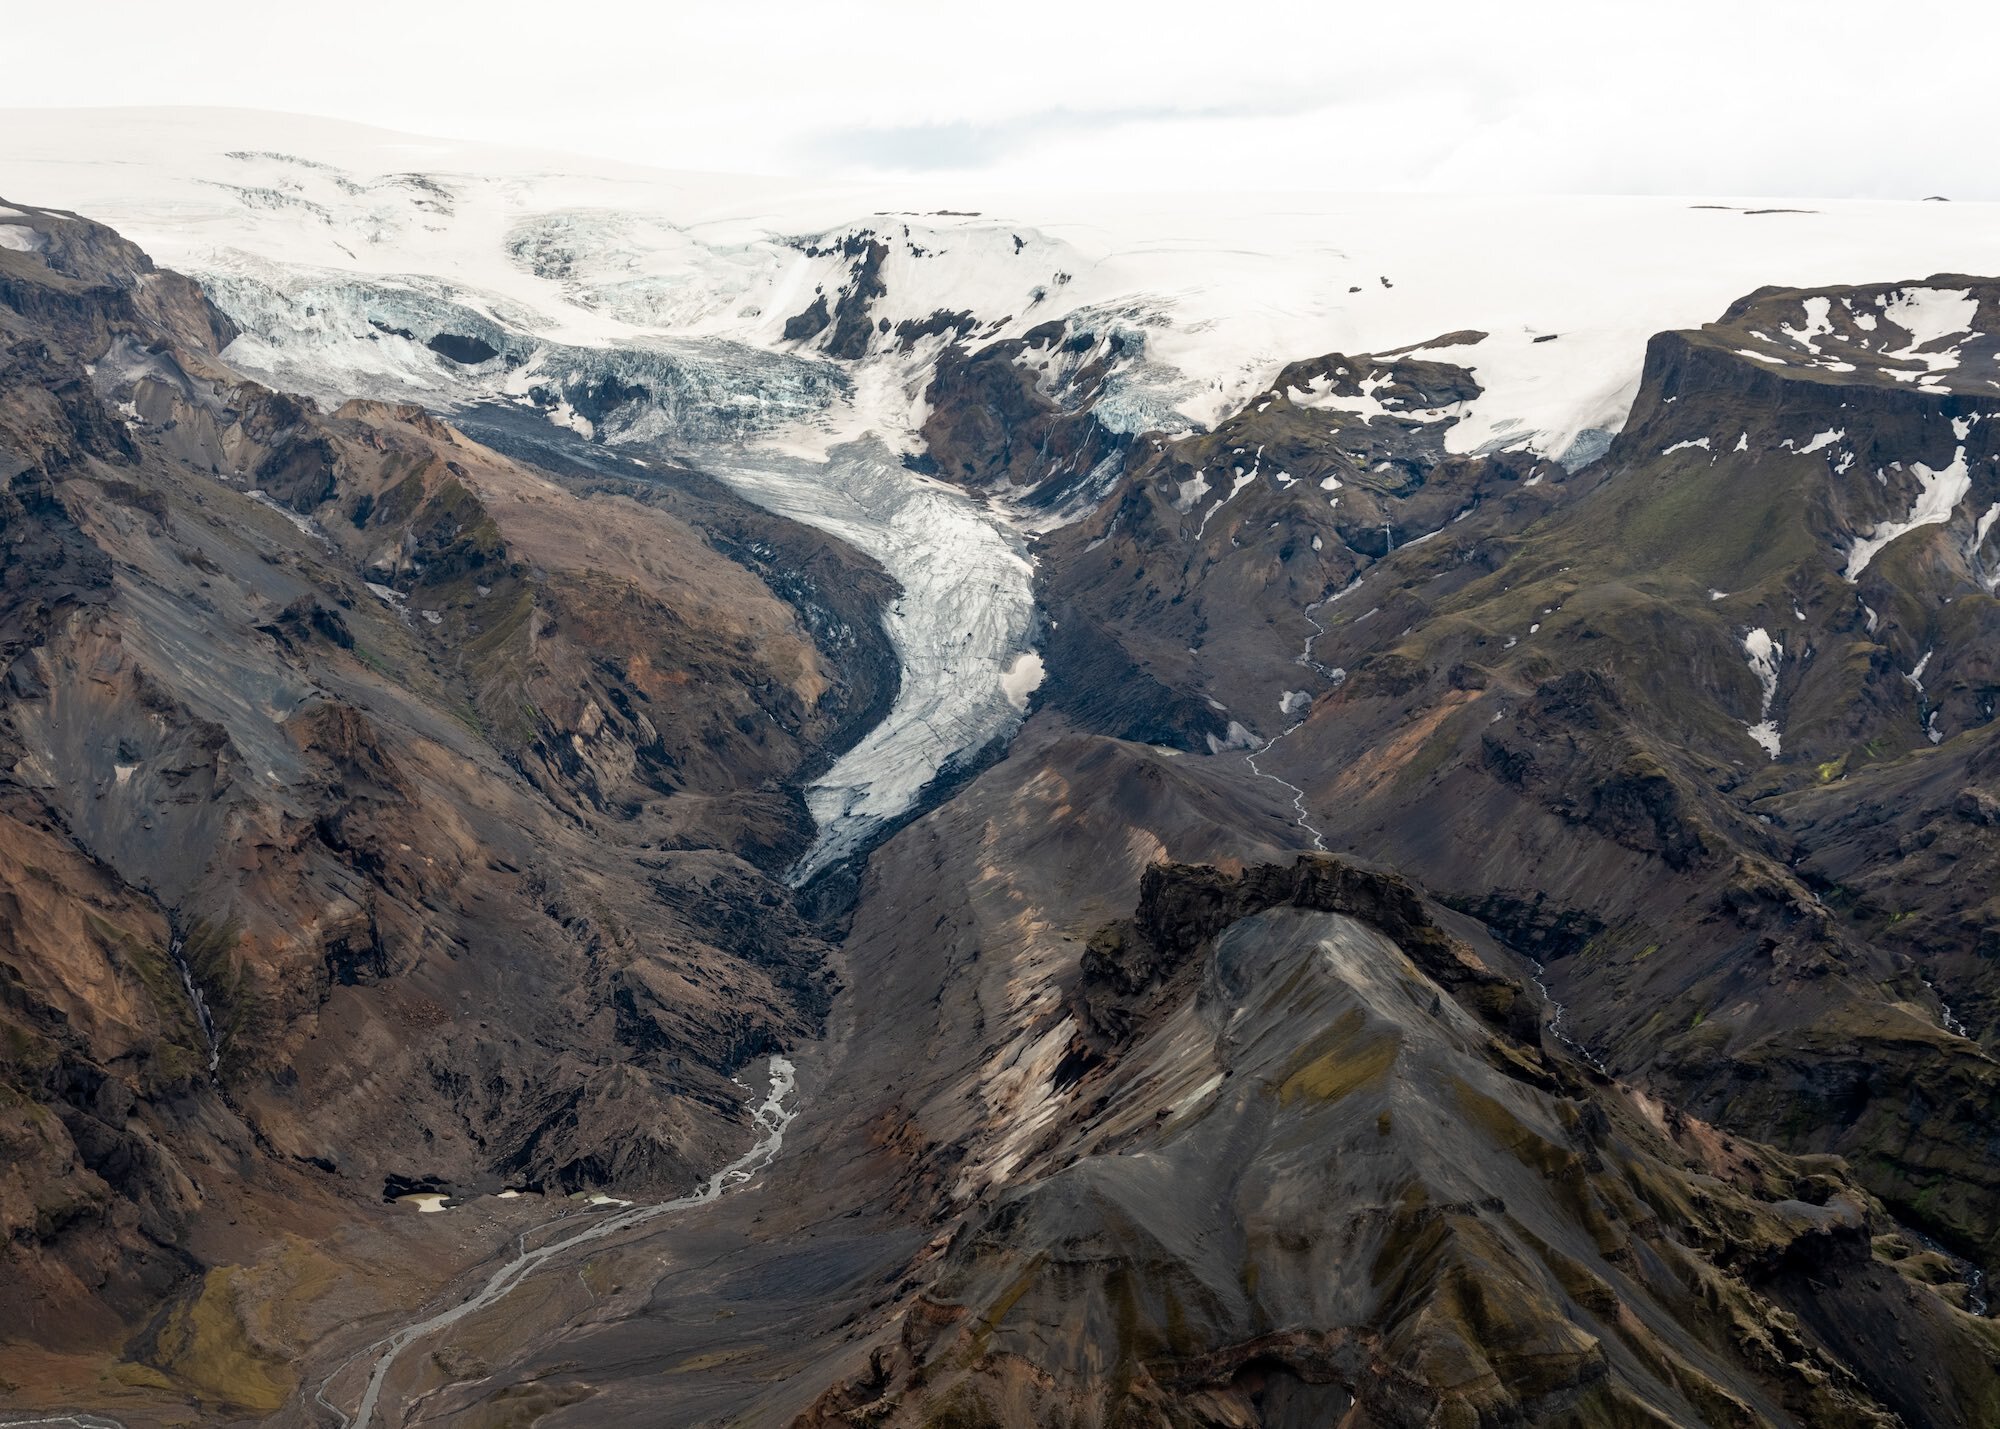   Tungnakvíslarjökull glacier in 1999 (top) and 2019 (bottom), by Olafur Eliasson  